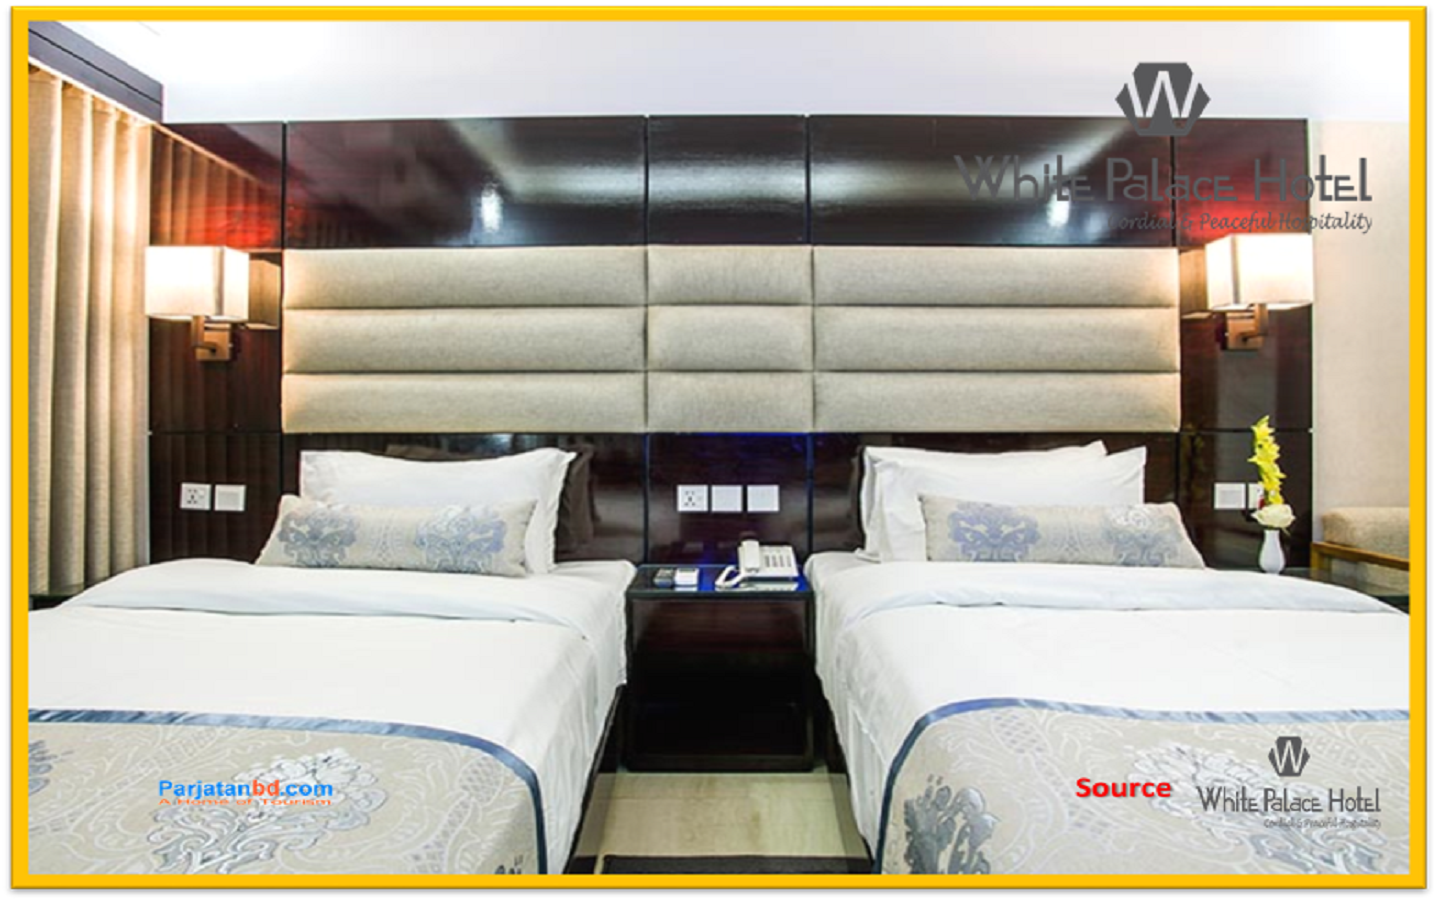 Room Super Deluxe Twin -1, White Palace Hotel, Uttara